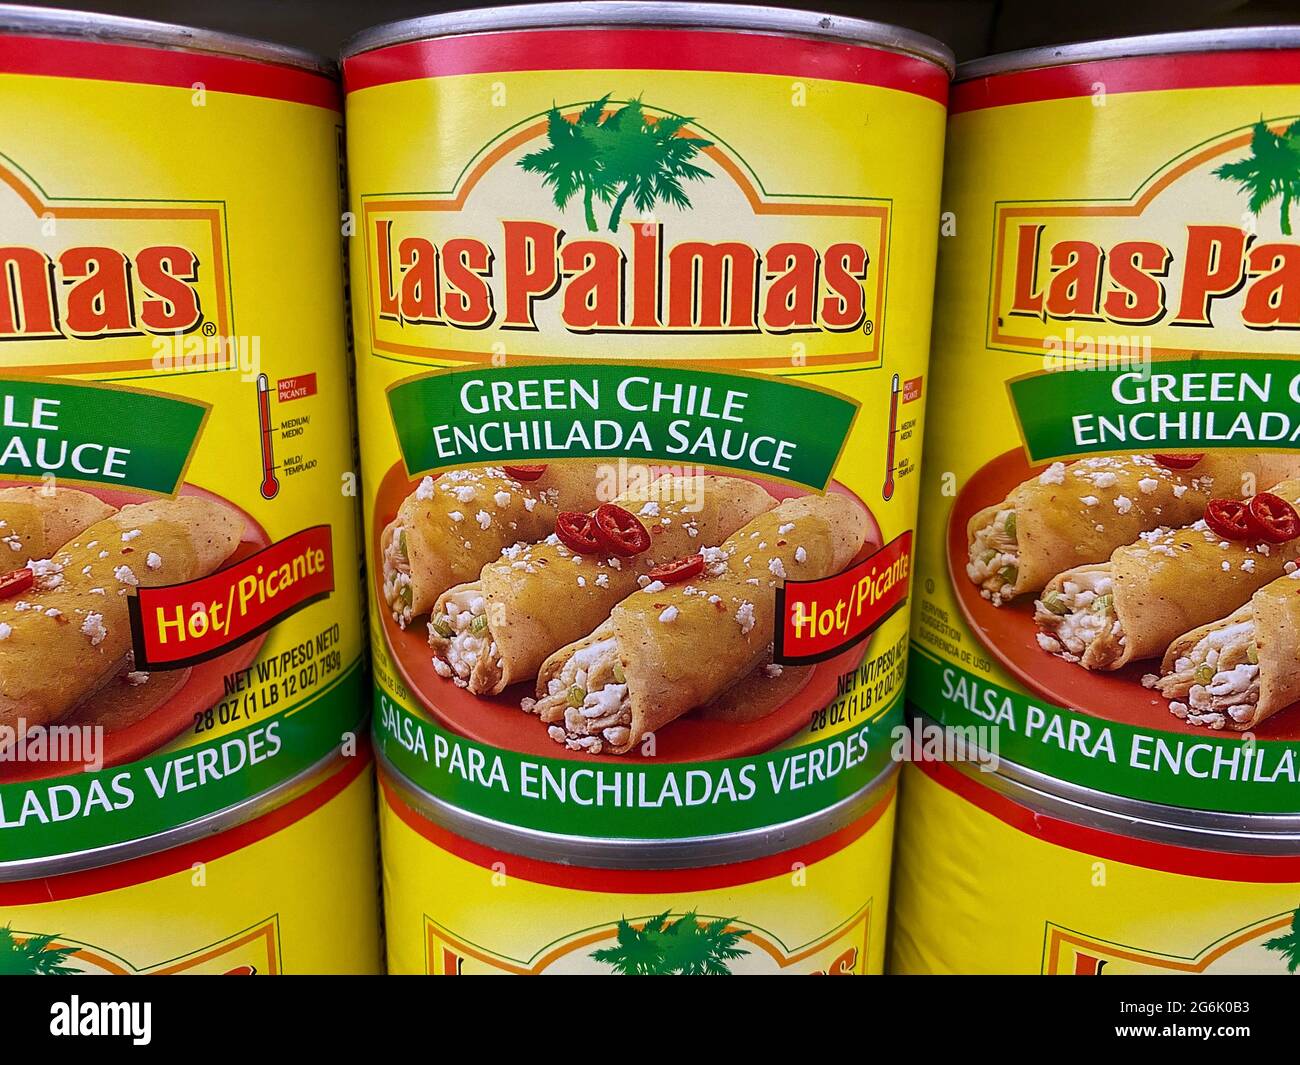 Las Palmas green chili enchilada sauce cans on store shelf Stock Photo